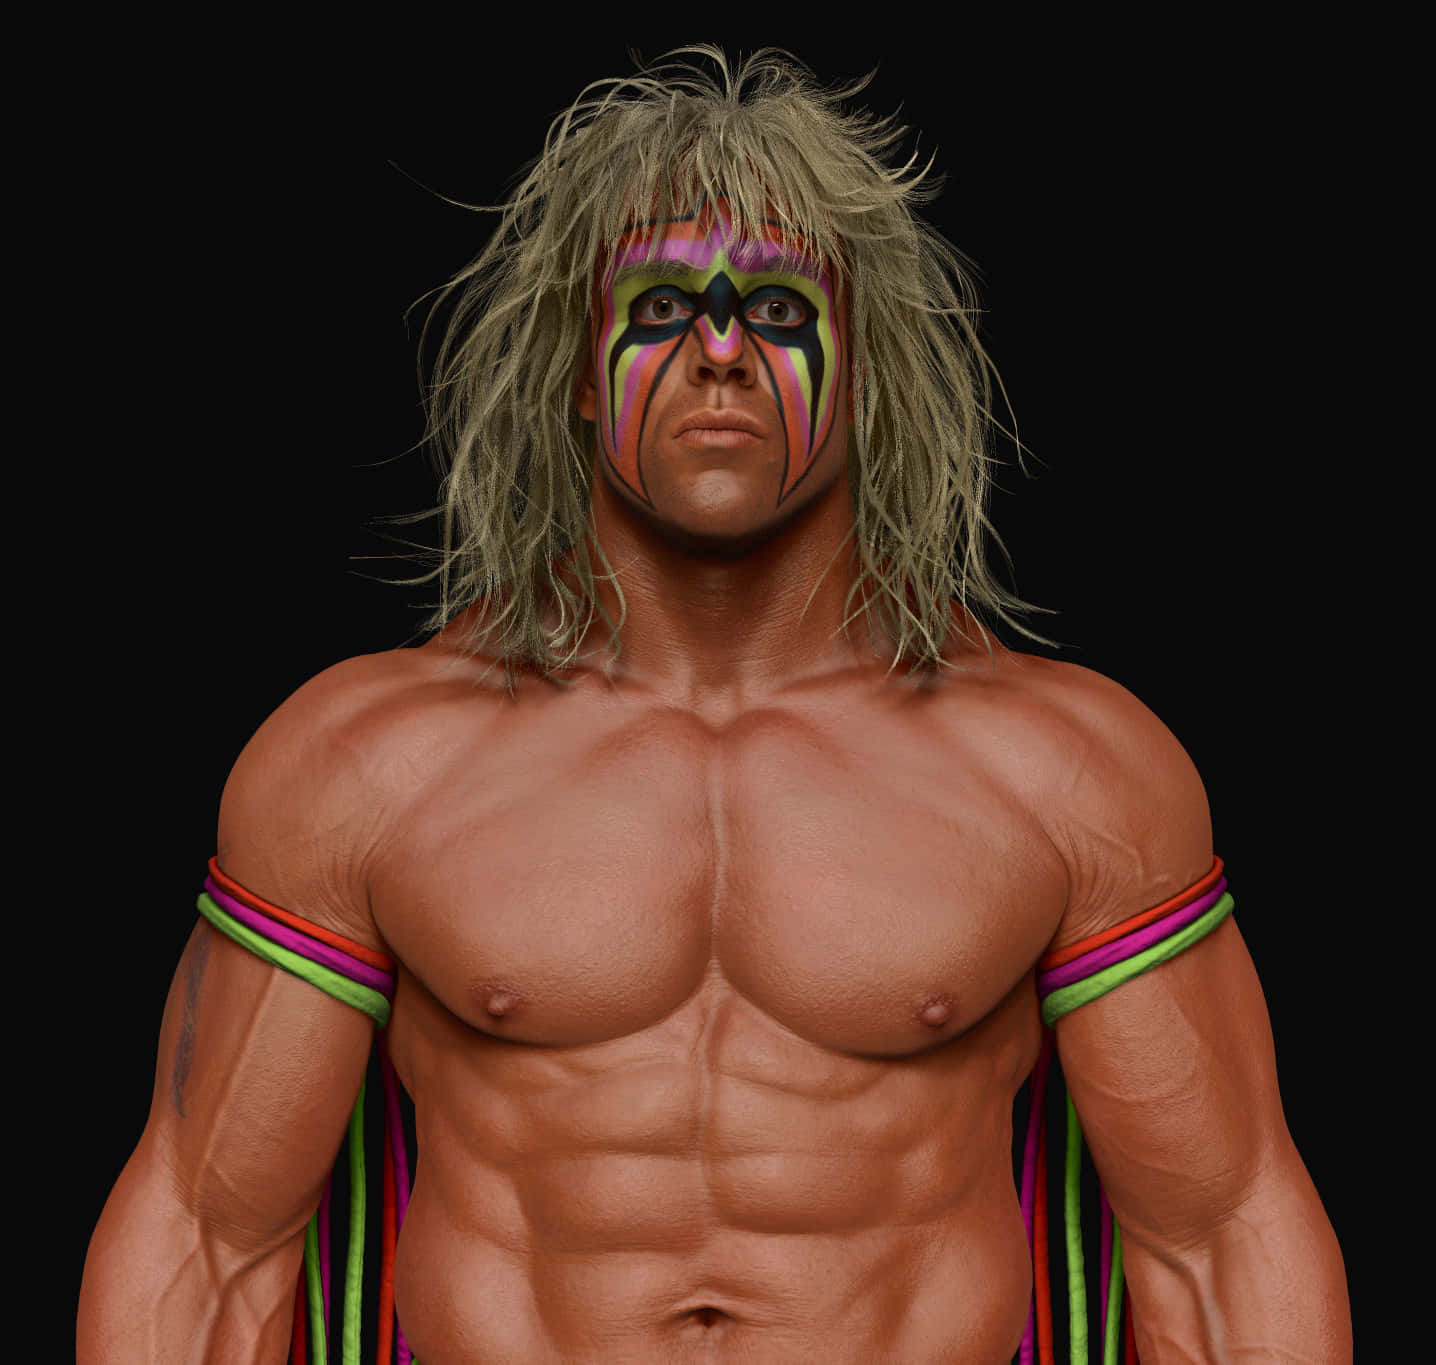 Wwe Wrestler Ultimate Warrior Digital Art Background